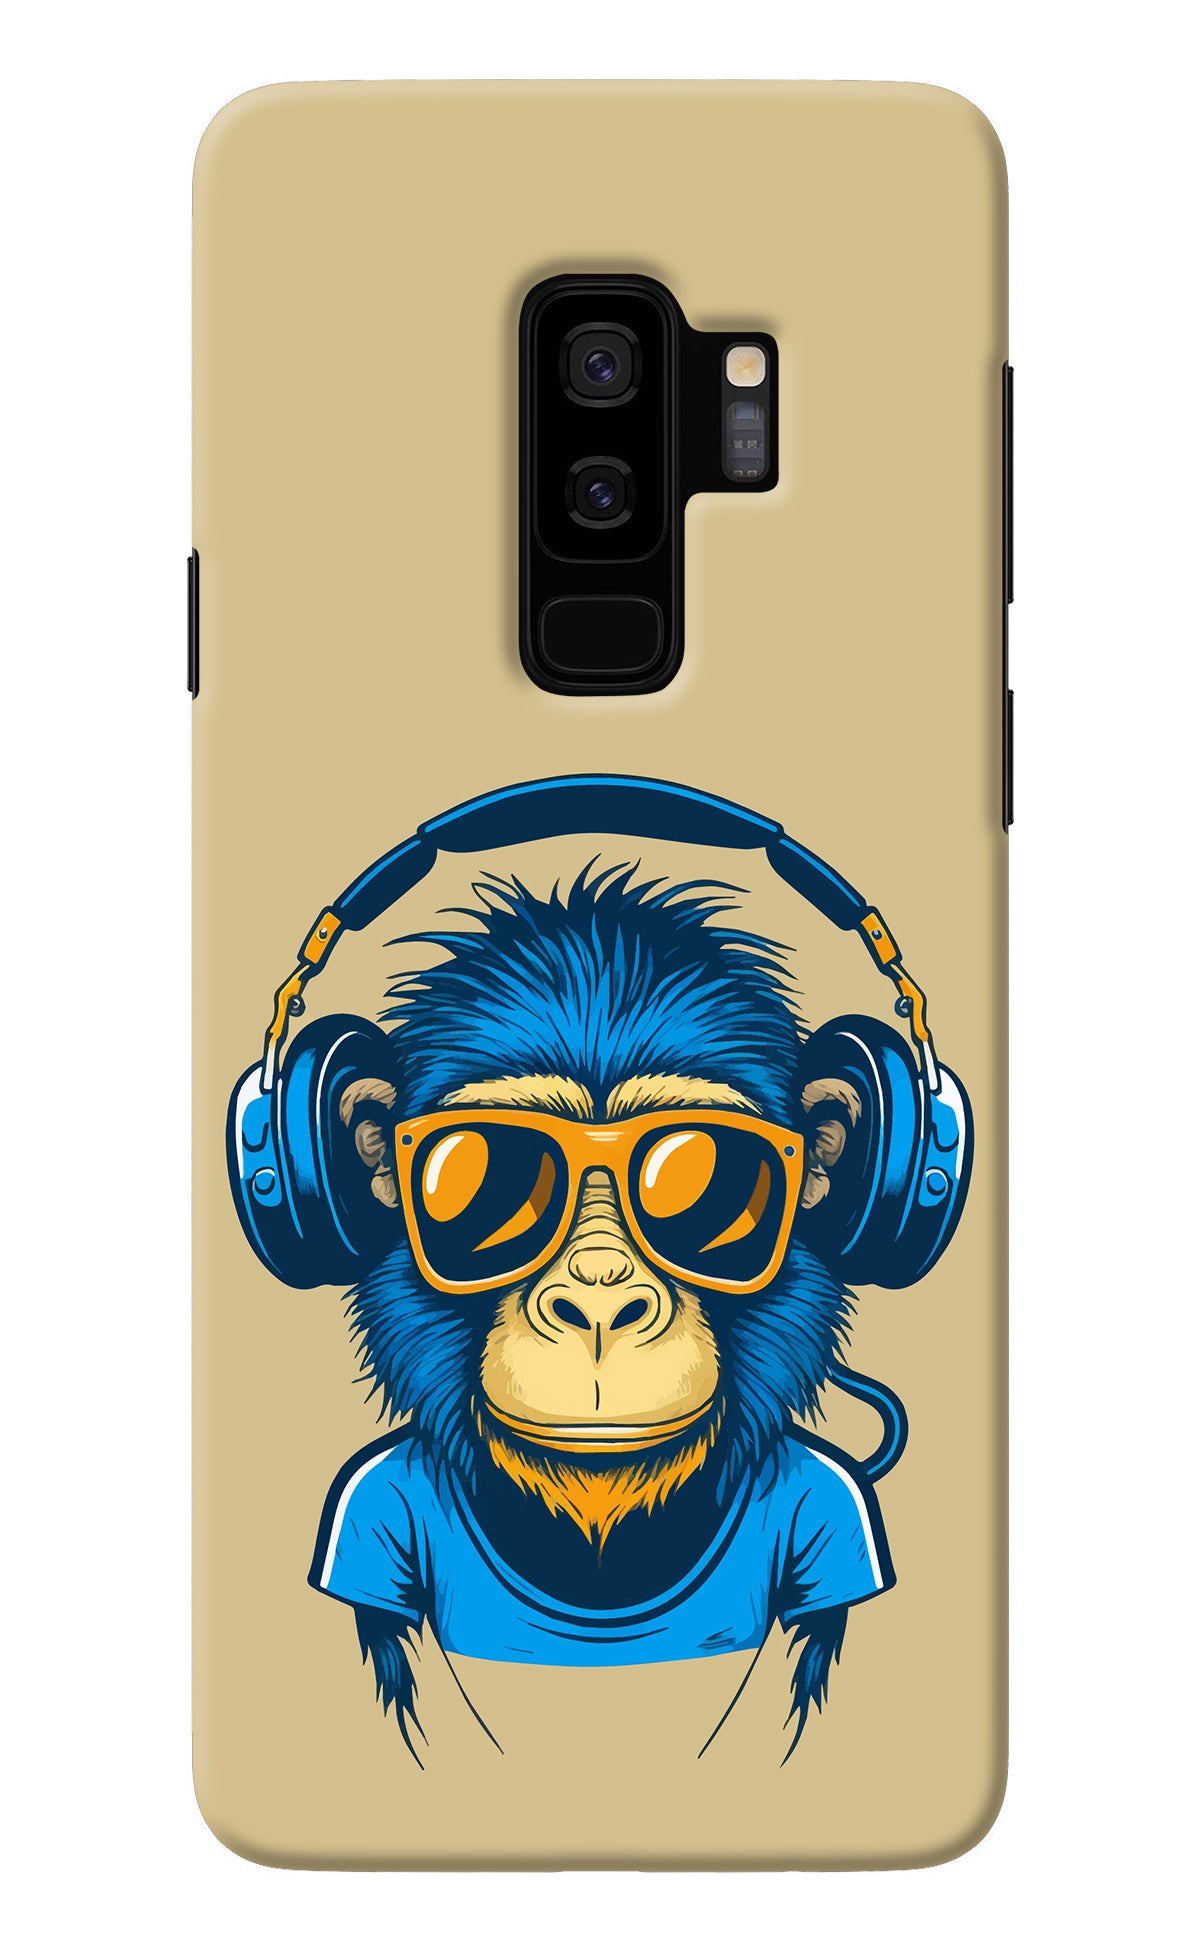 Monkey Headphone Samsung S9 Plus Back Cover